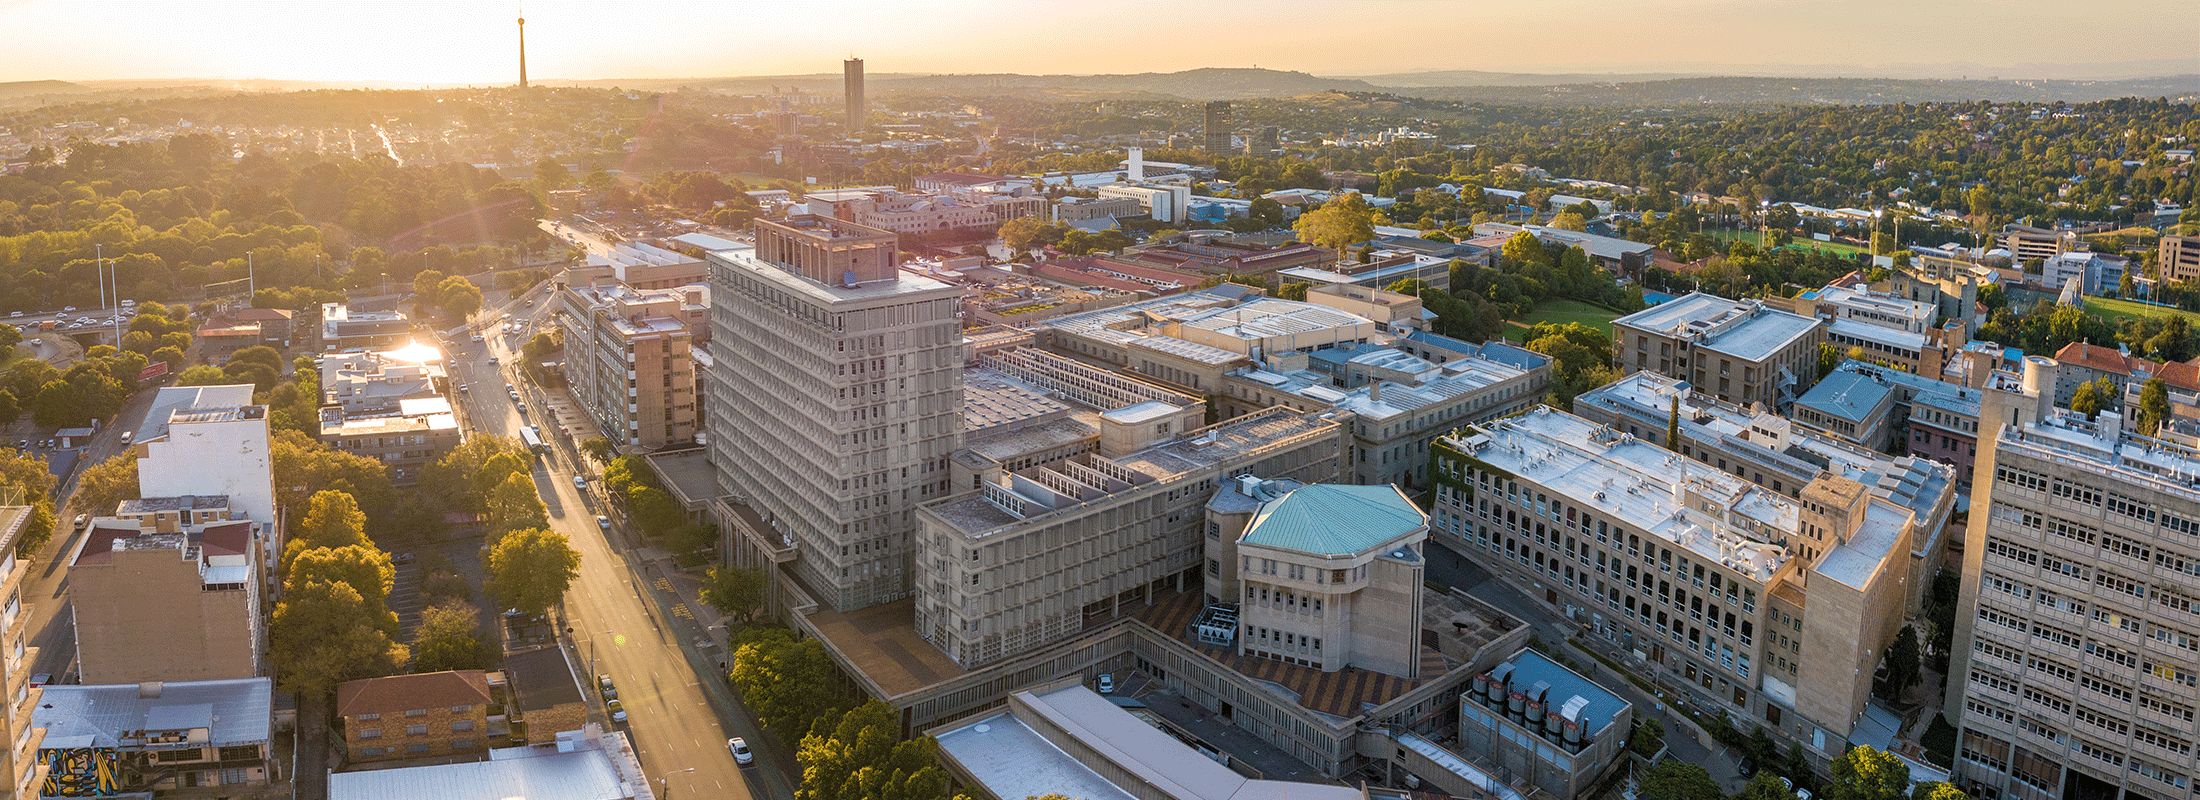 Panorama view of Braamfontein campus taken by Shivan Parusnath